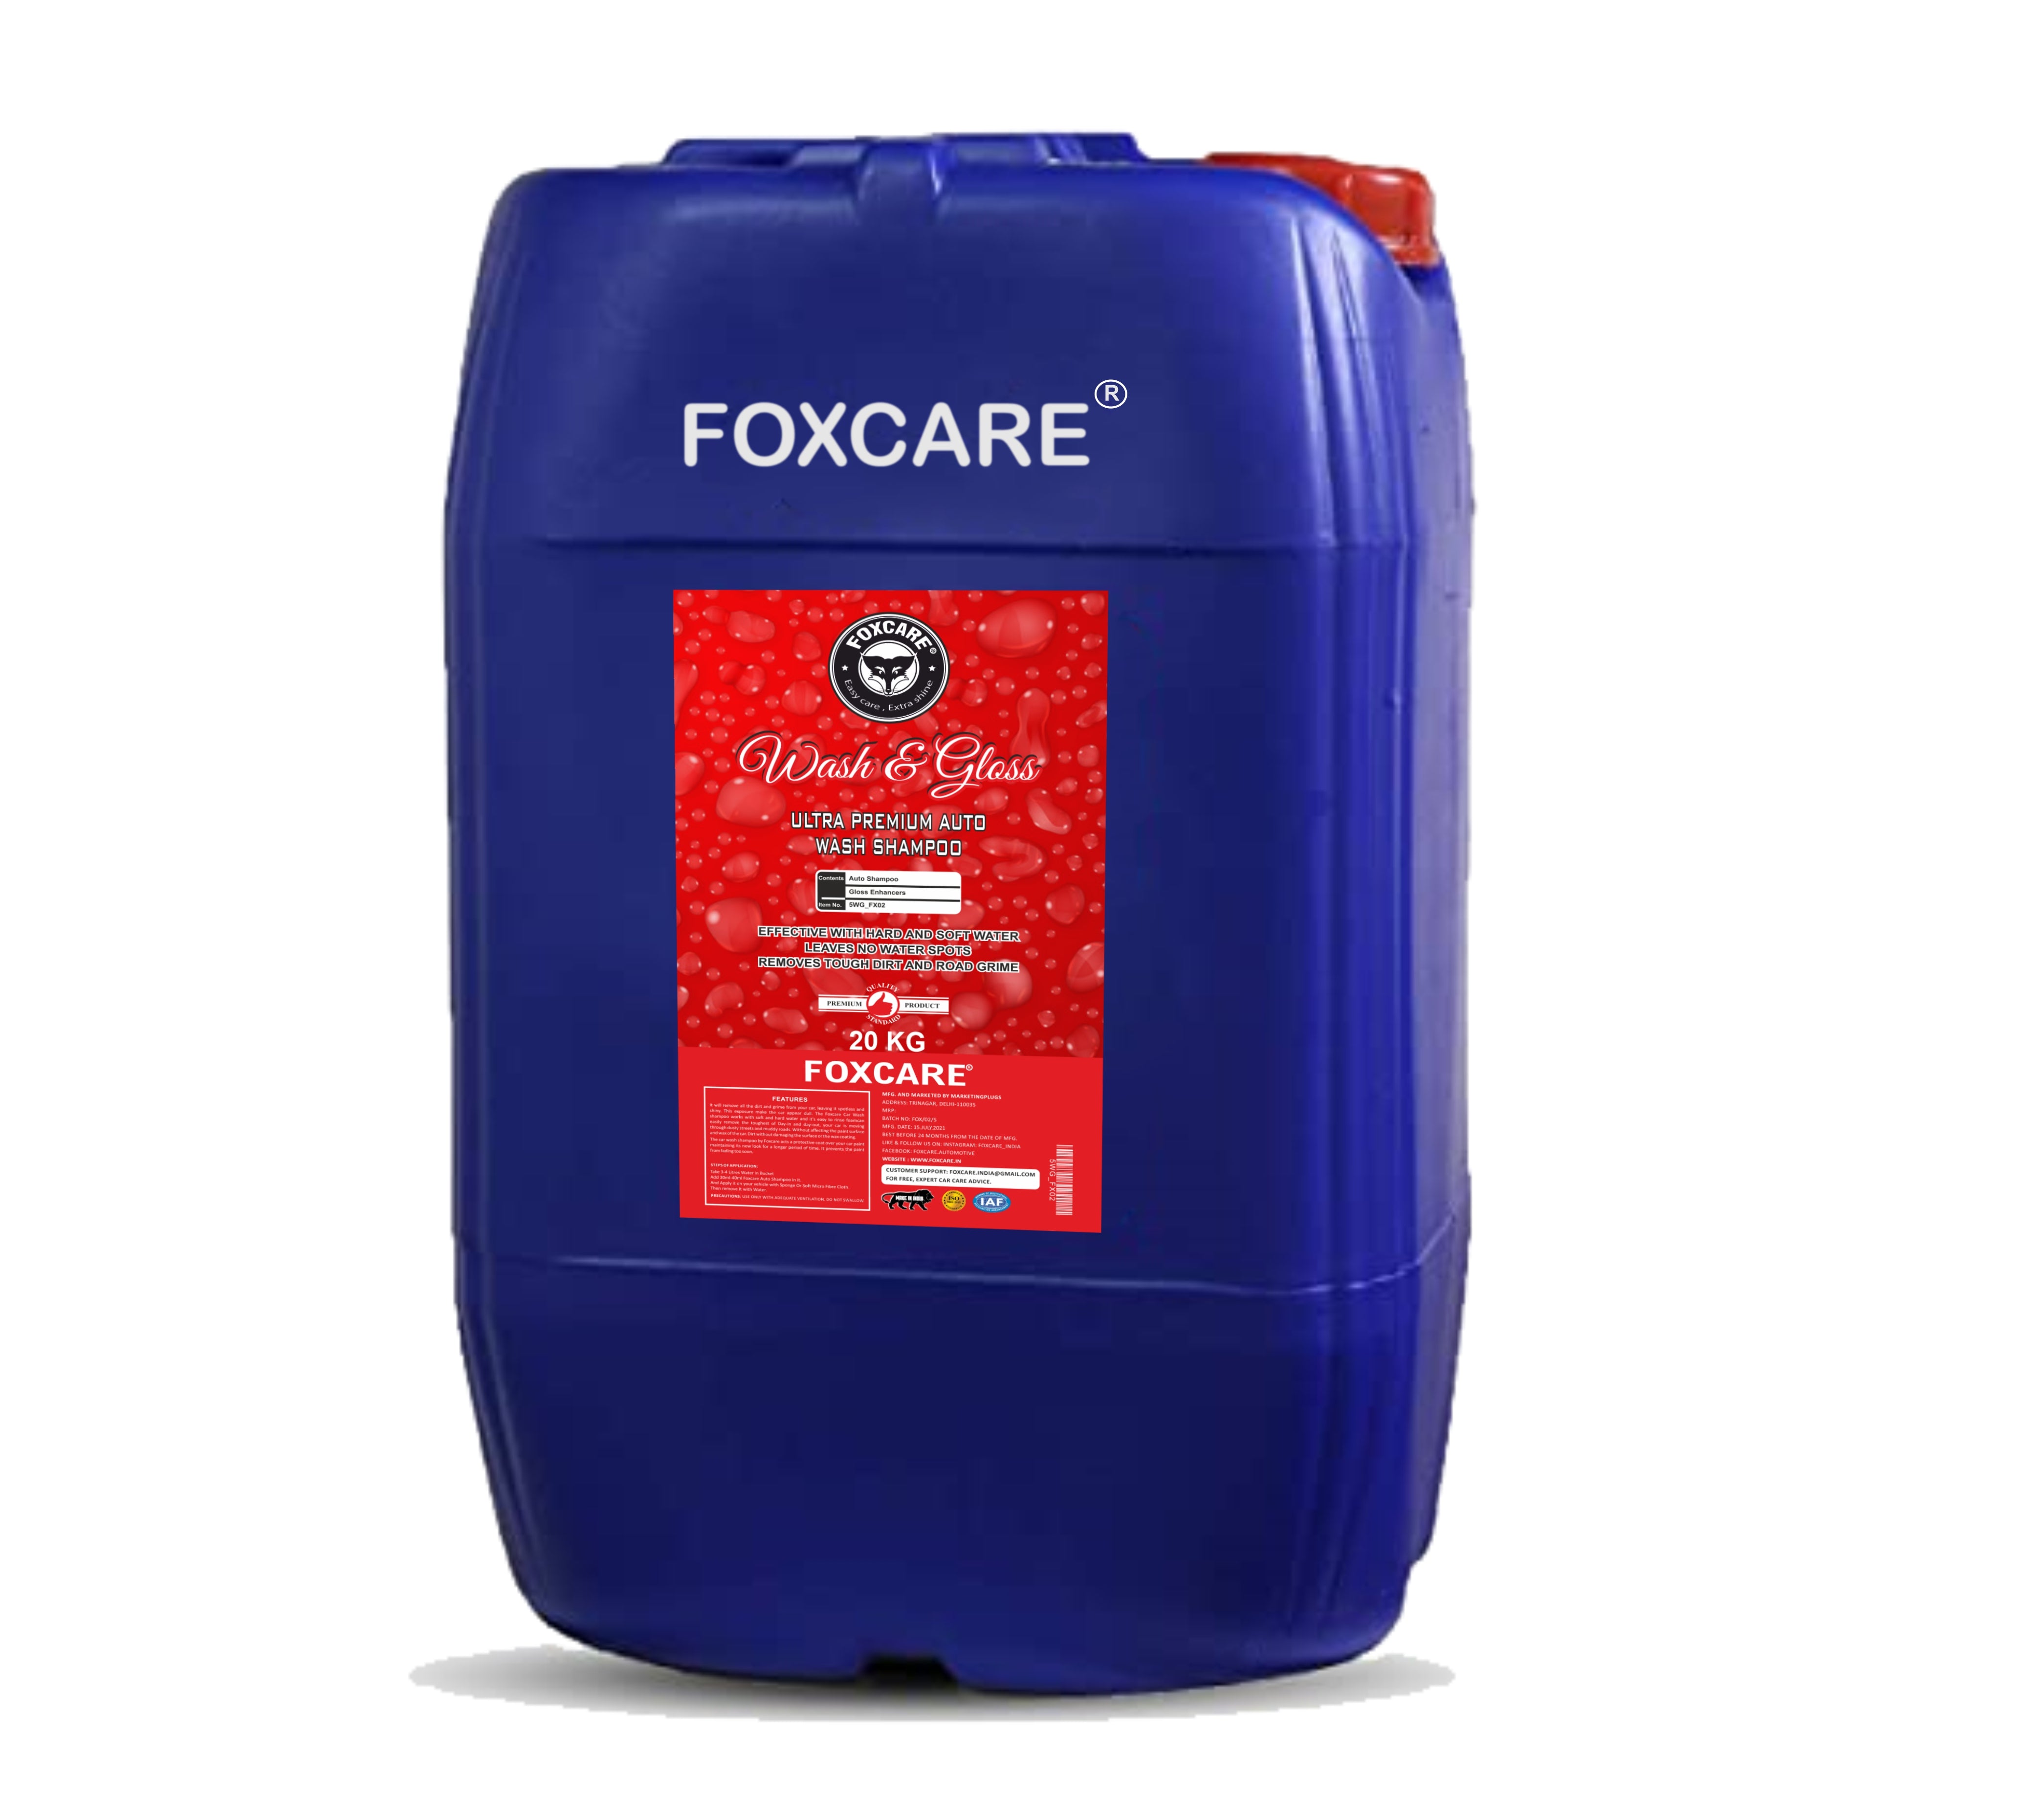 Foxcare Wash & Gloss - Ultra Premium Auto wash Shampoo (20KG)